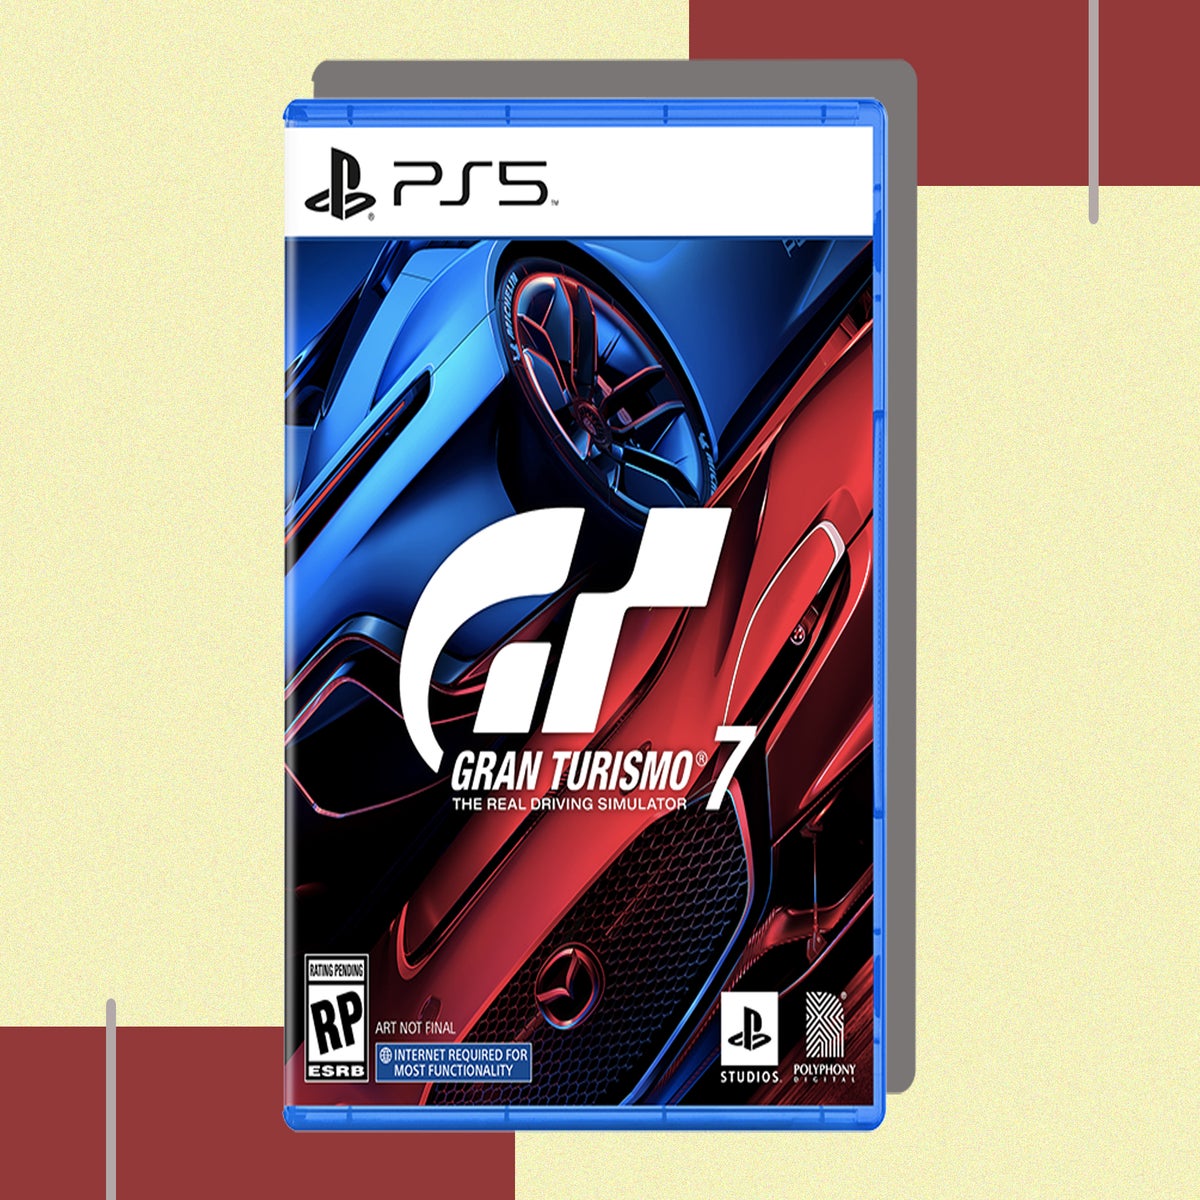 Gran Turismo 7 - PlayStation Showcase 2021 Trailer